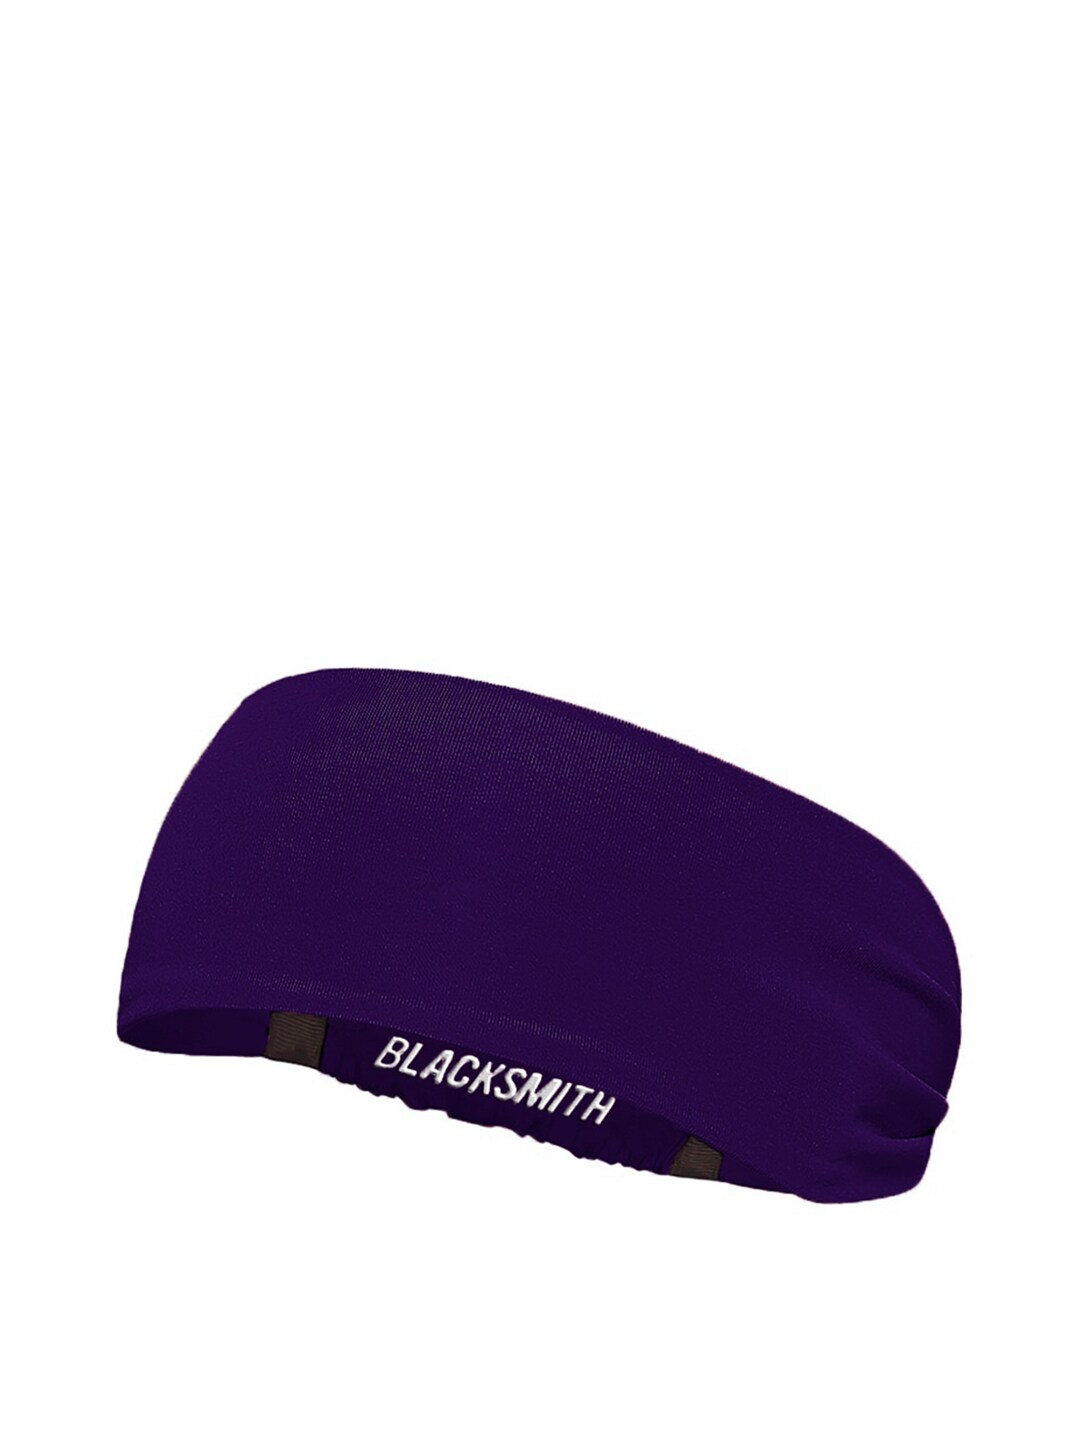 Blacksmith Purple Solid Bandana Headband Price in India